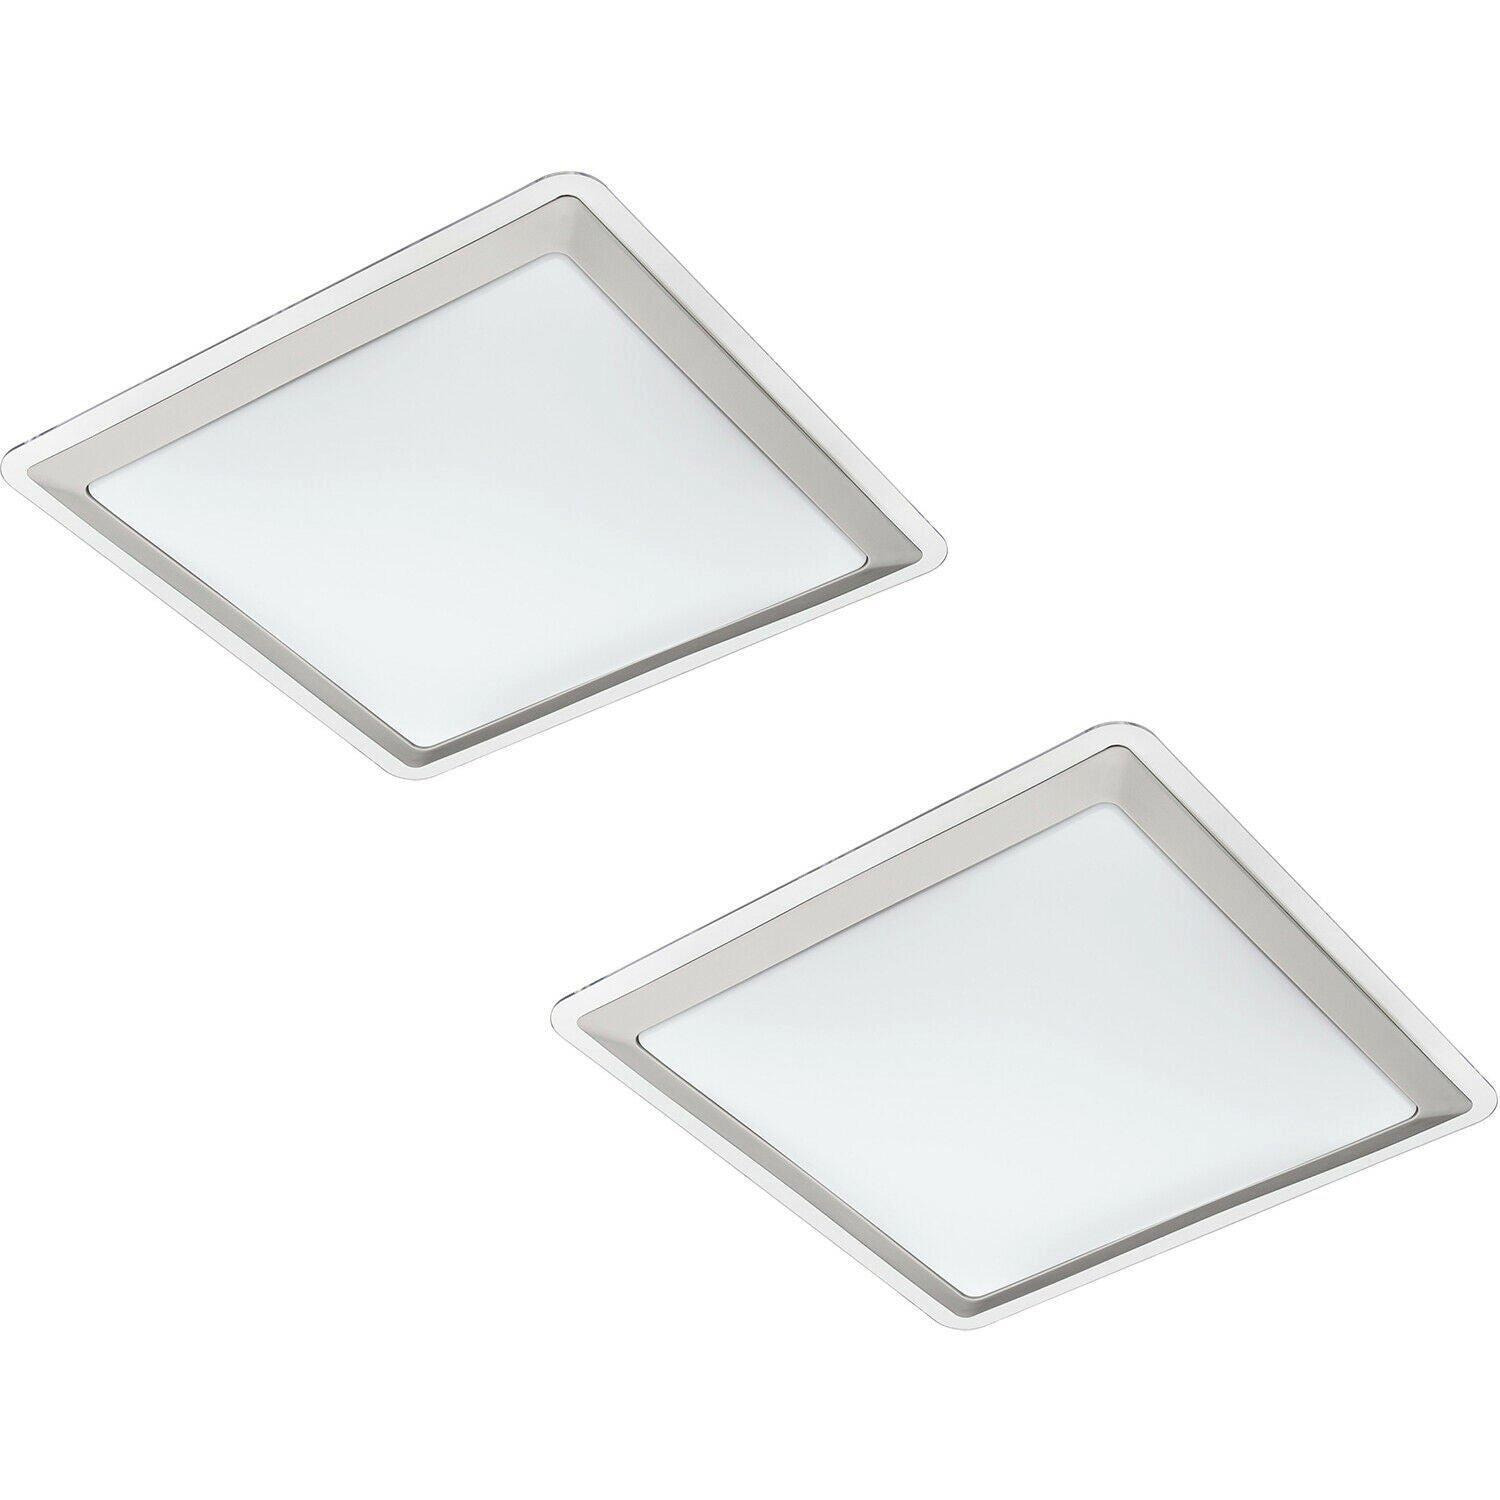 2 PACK Wall Flush Ceiling Light Colour White Shade White Silver Plastic LED 24W - image 1